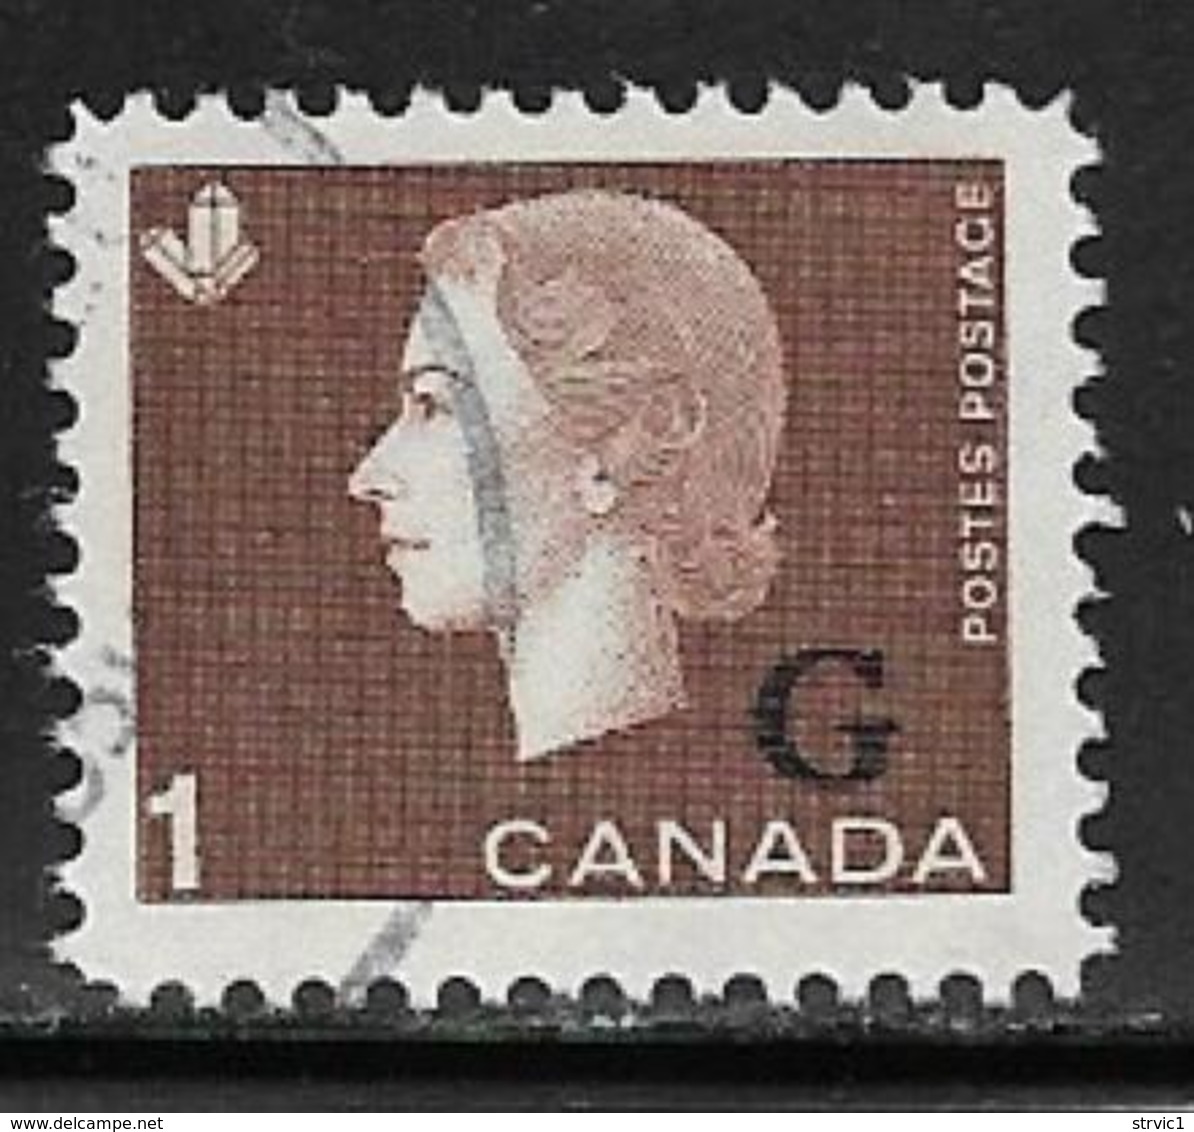 Canada scott # O40-1,O43-5,O45a,O46 used Canada Official G overprints, 1955-63